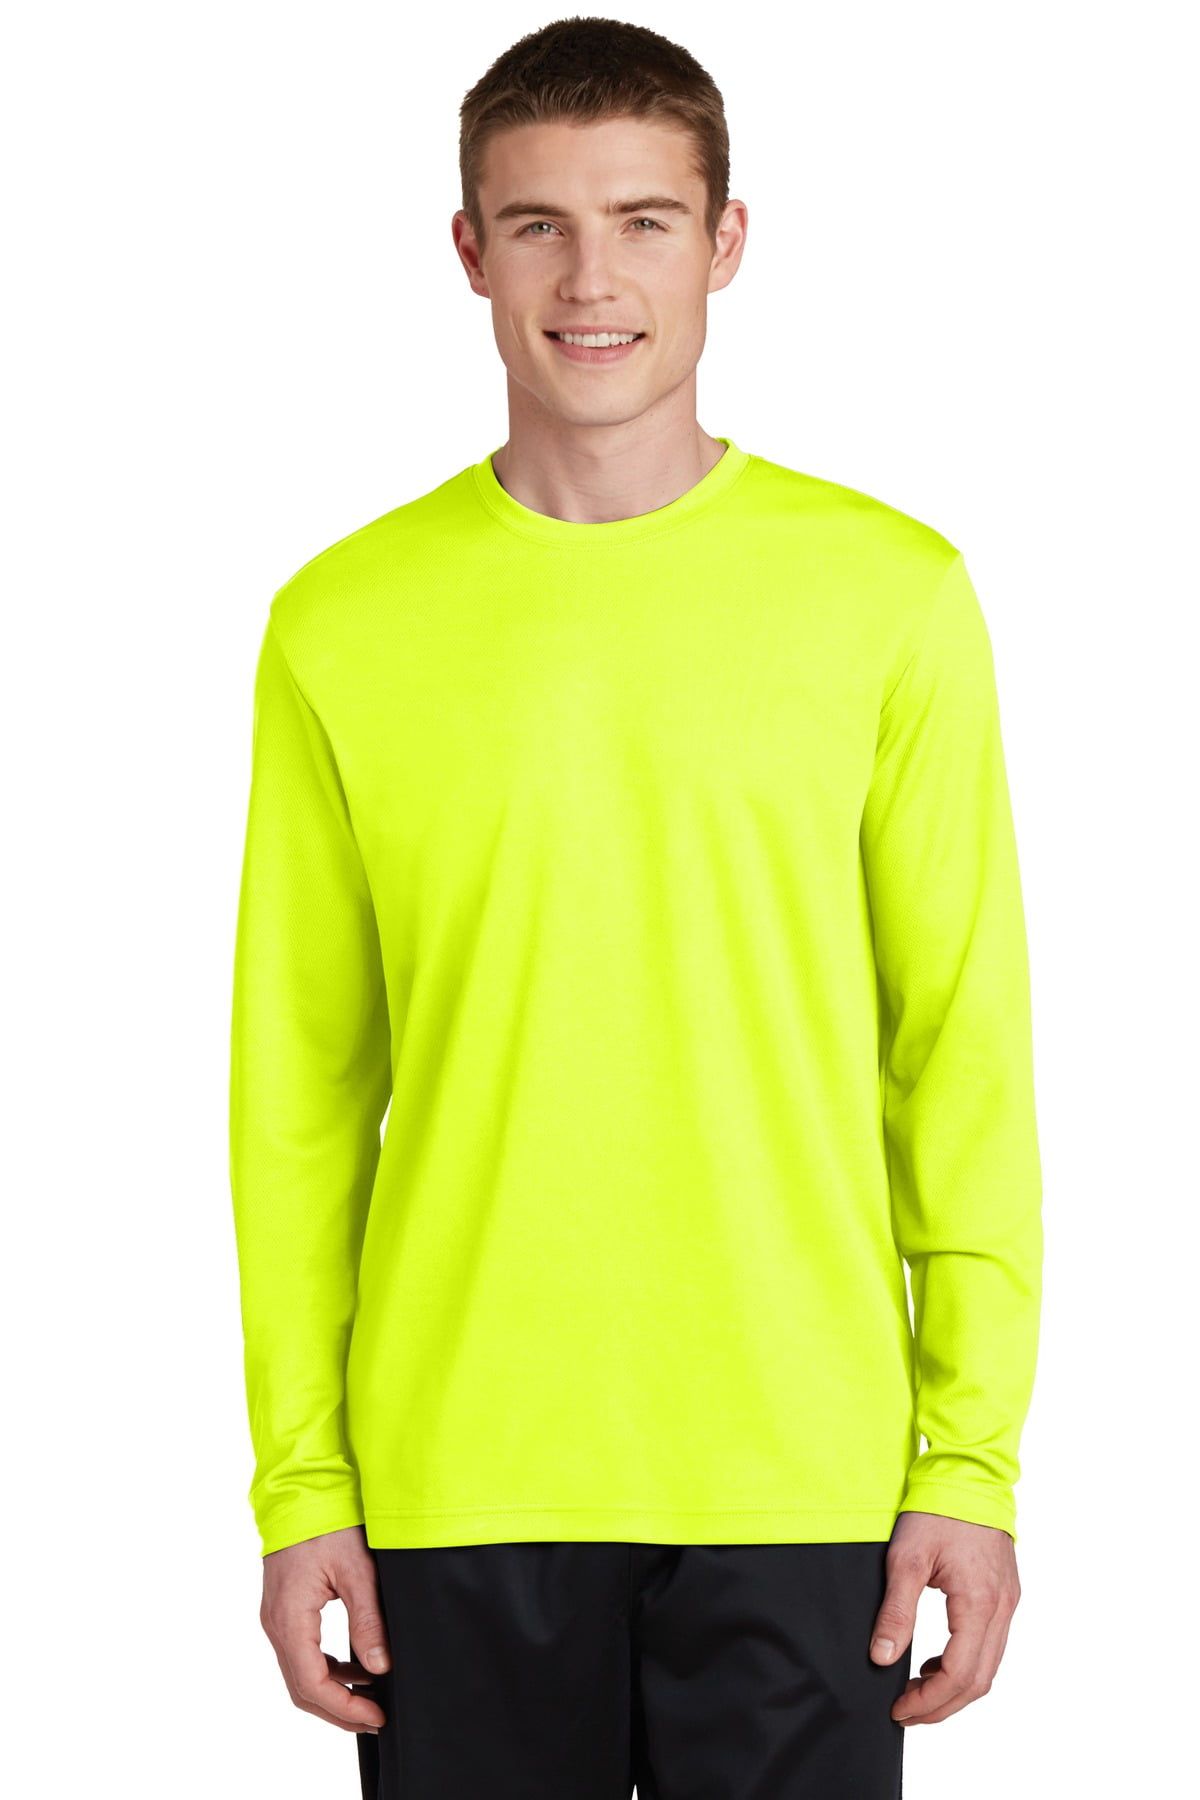 Airco Brouwerij Productie Sport Tek Adult Male Men Plain Long Sleeves T-Shirt Neon Green 4X-Large -  Walmart.com